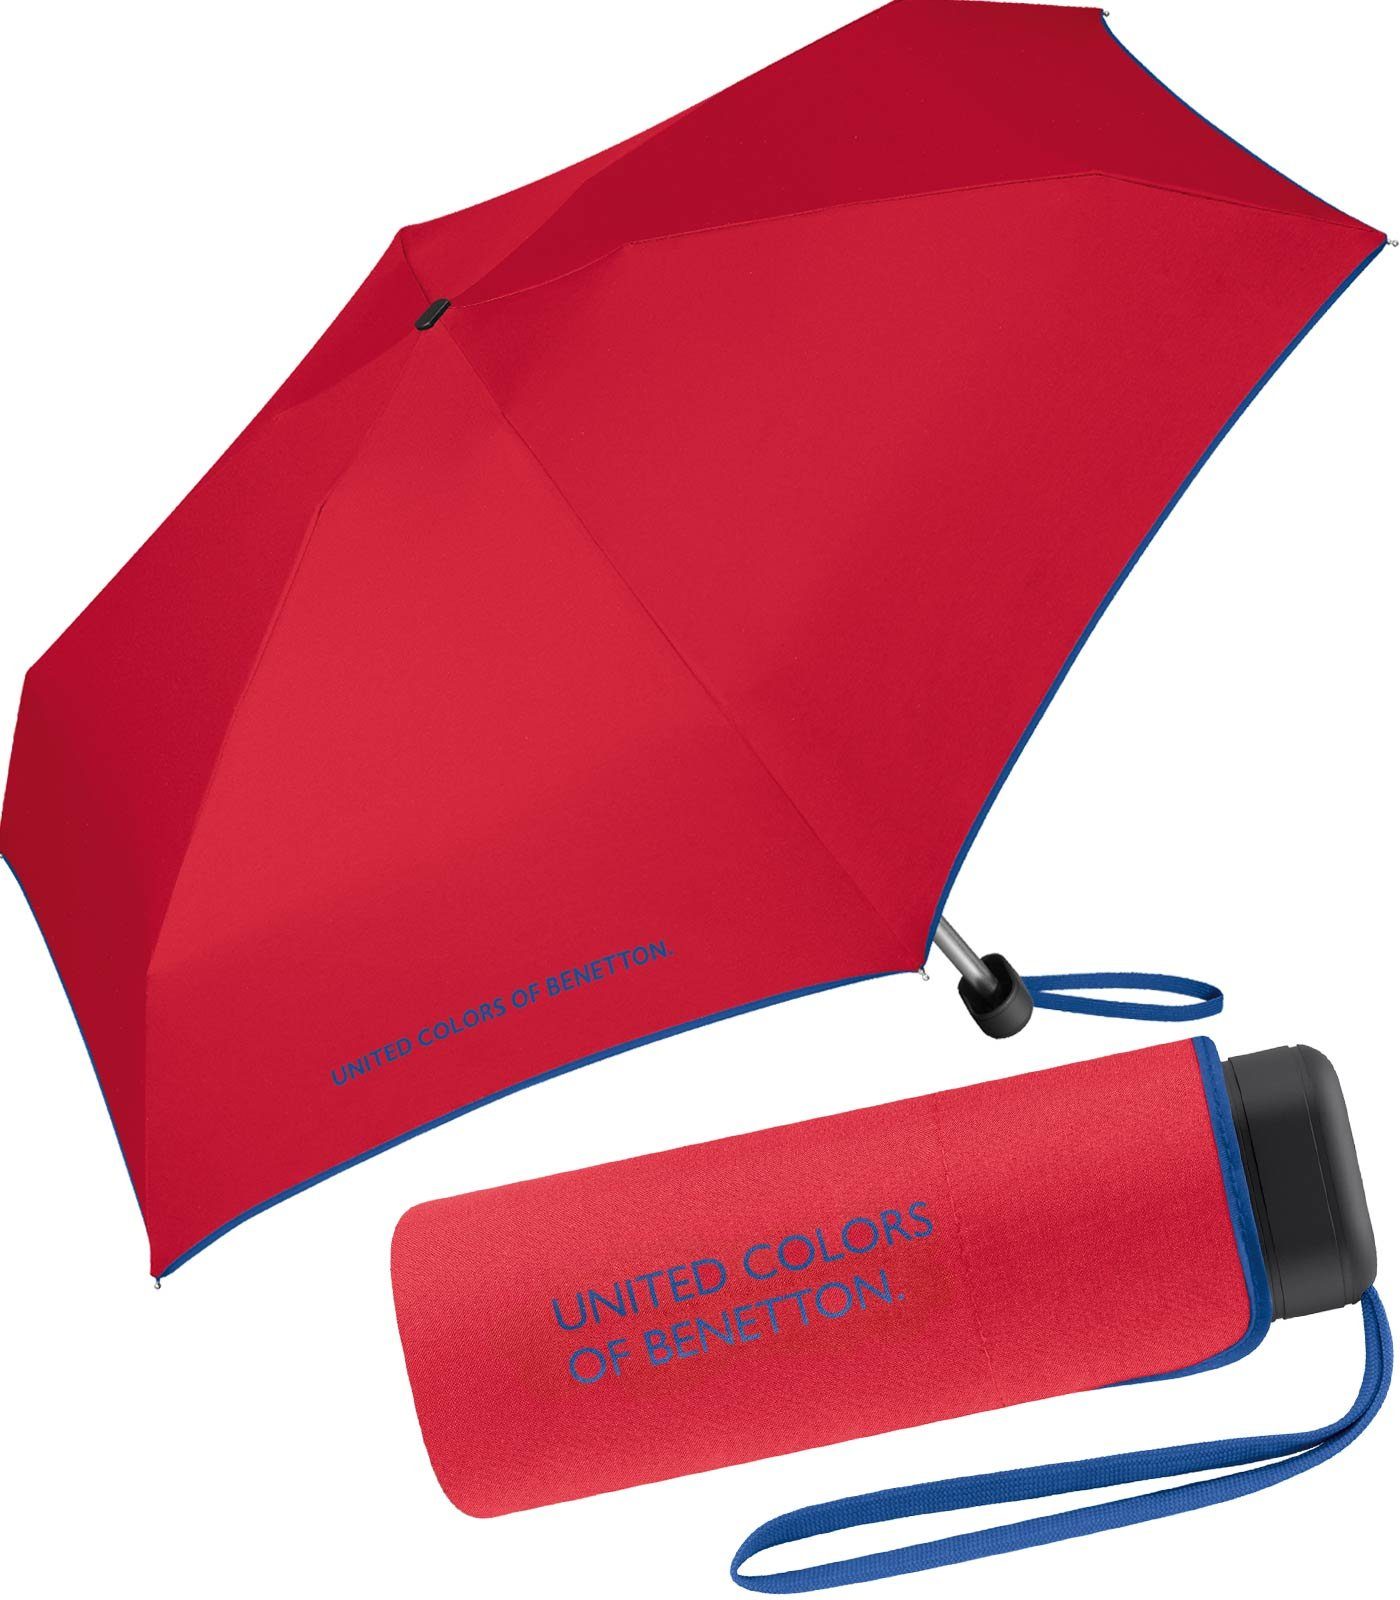 United Colors of Benetton Taschenregenschirm winziger Damen-Regenschirm mit Handöffner, mit Kontrastfarben am Schirmrand - rot-blau